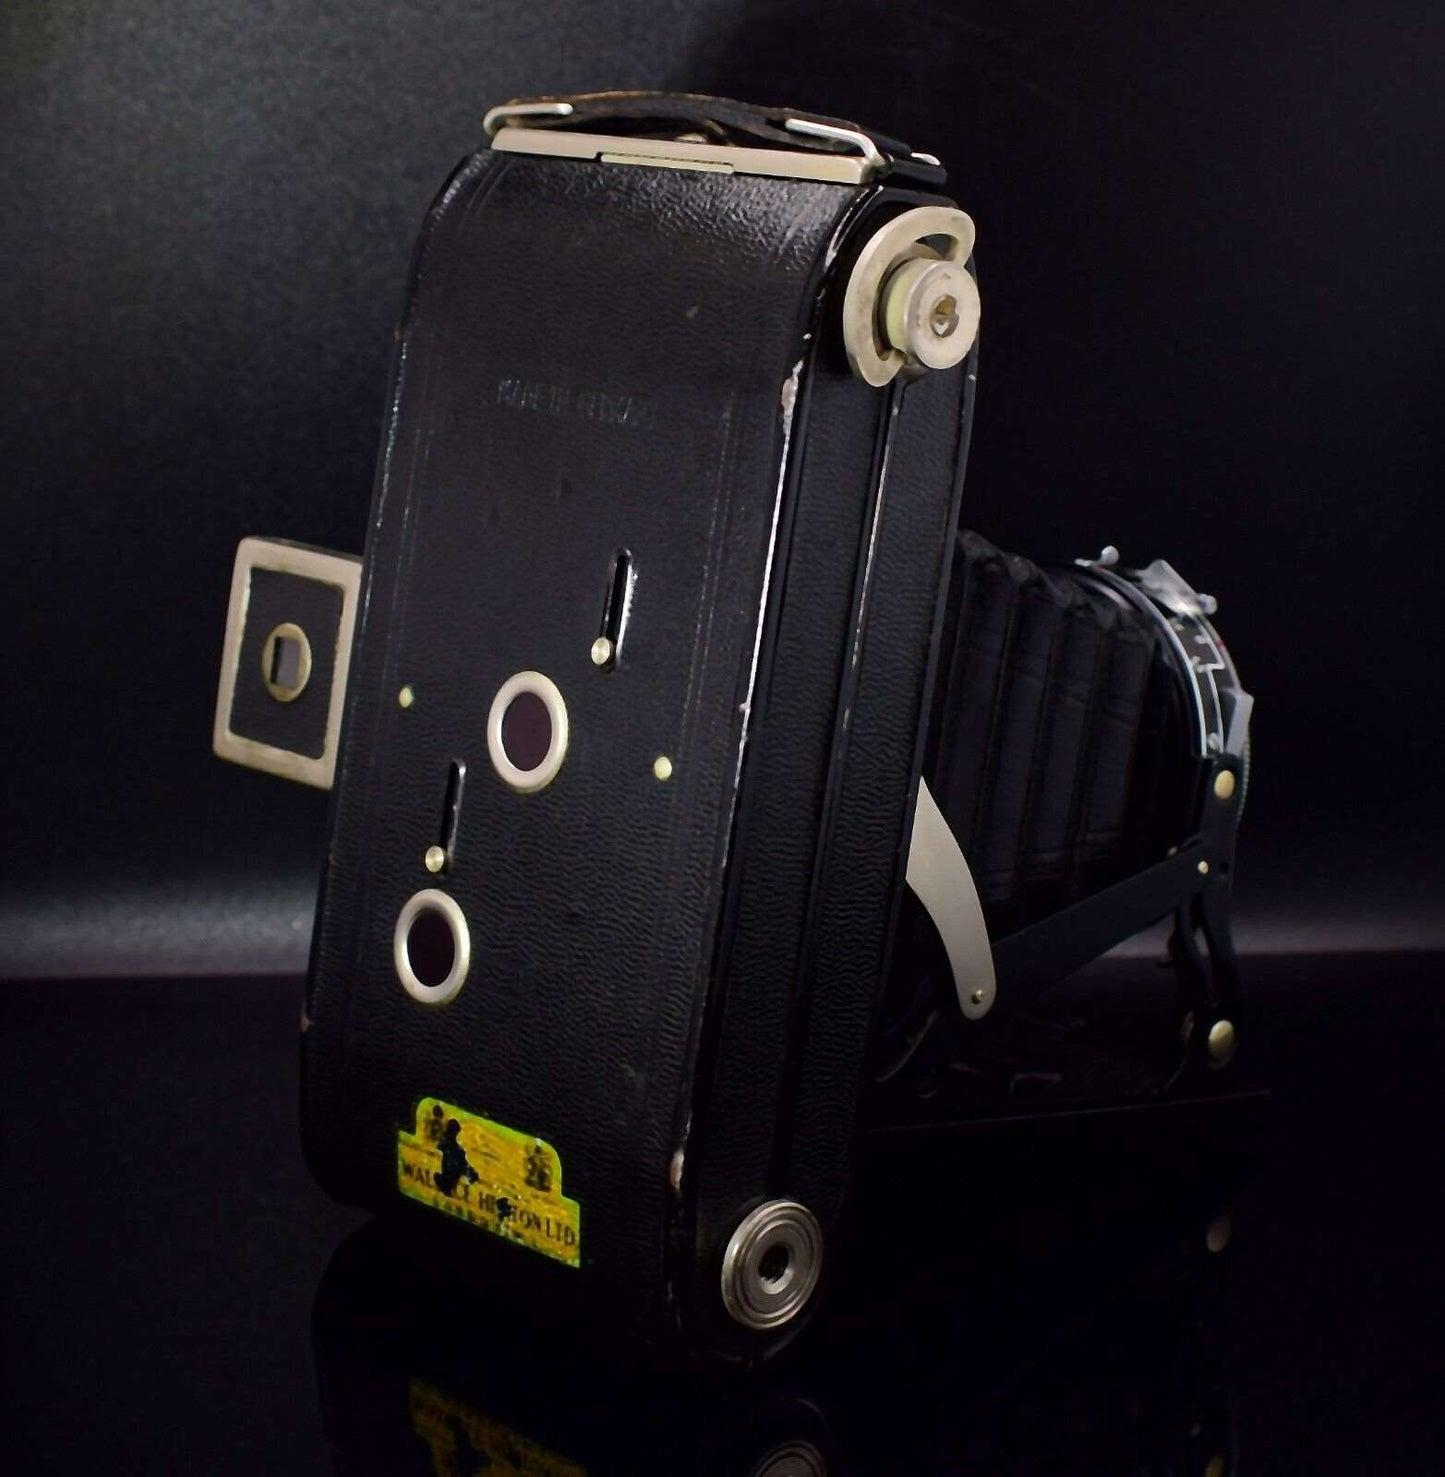 ADOX SPORT IIa 2a Medium Format 120 Film Folding Camera cw Steinheil Cassar Lens